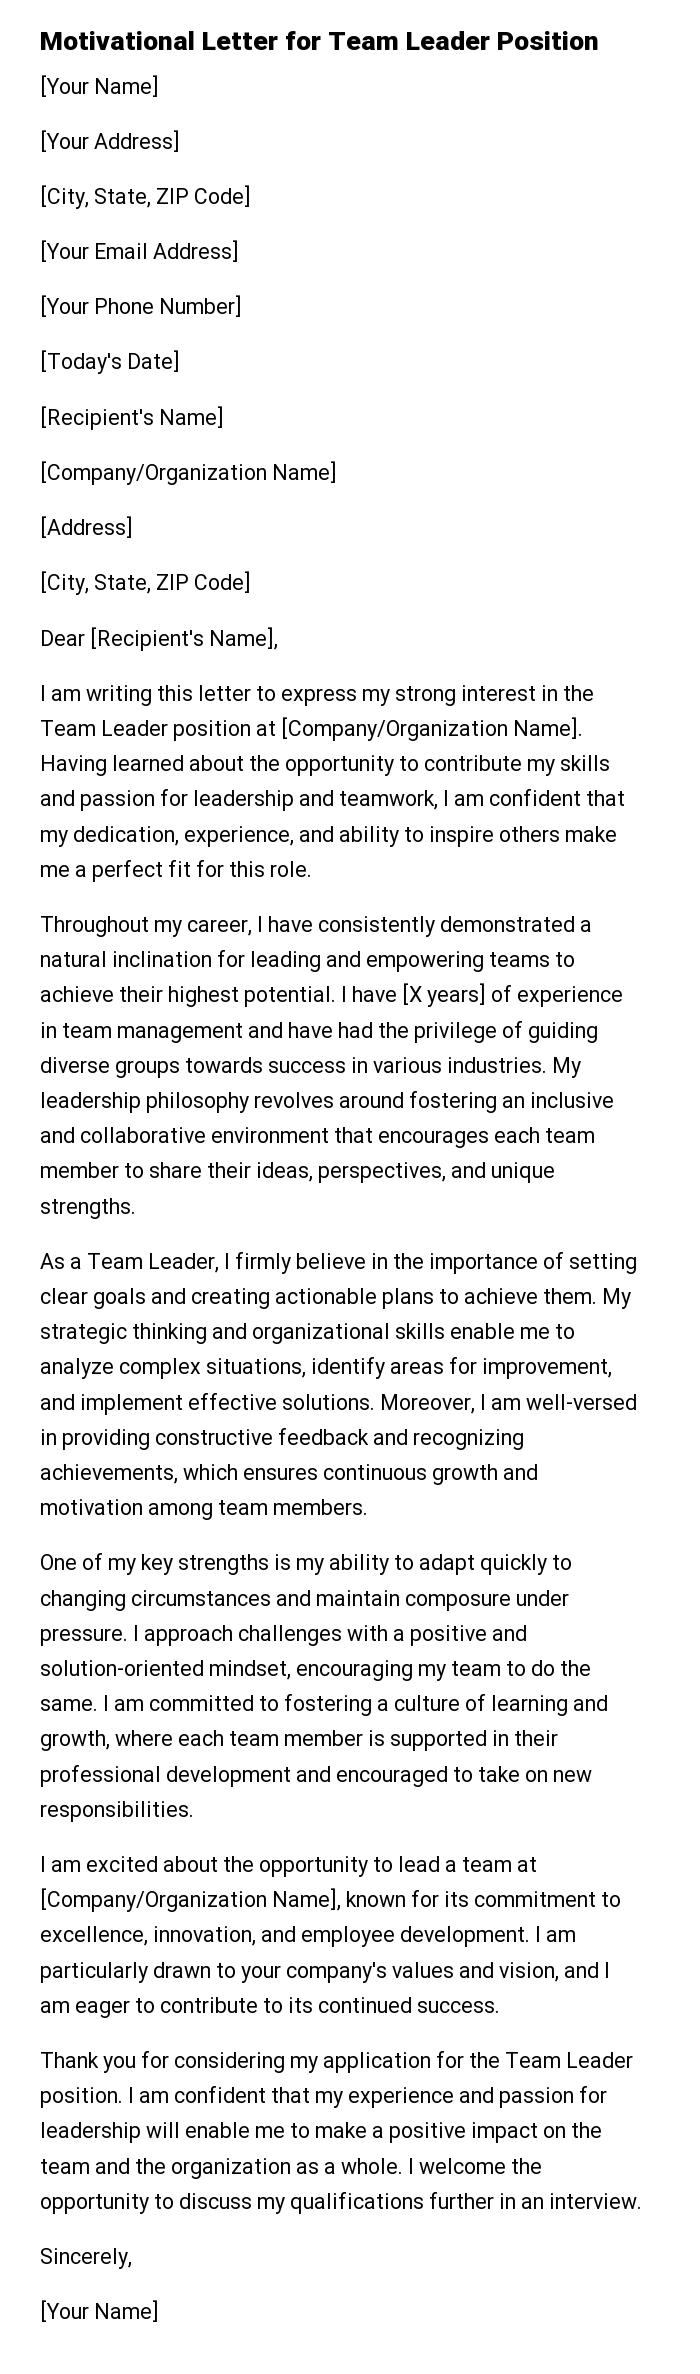 Motivational Letter for Team Leader Position